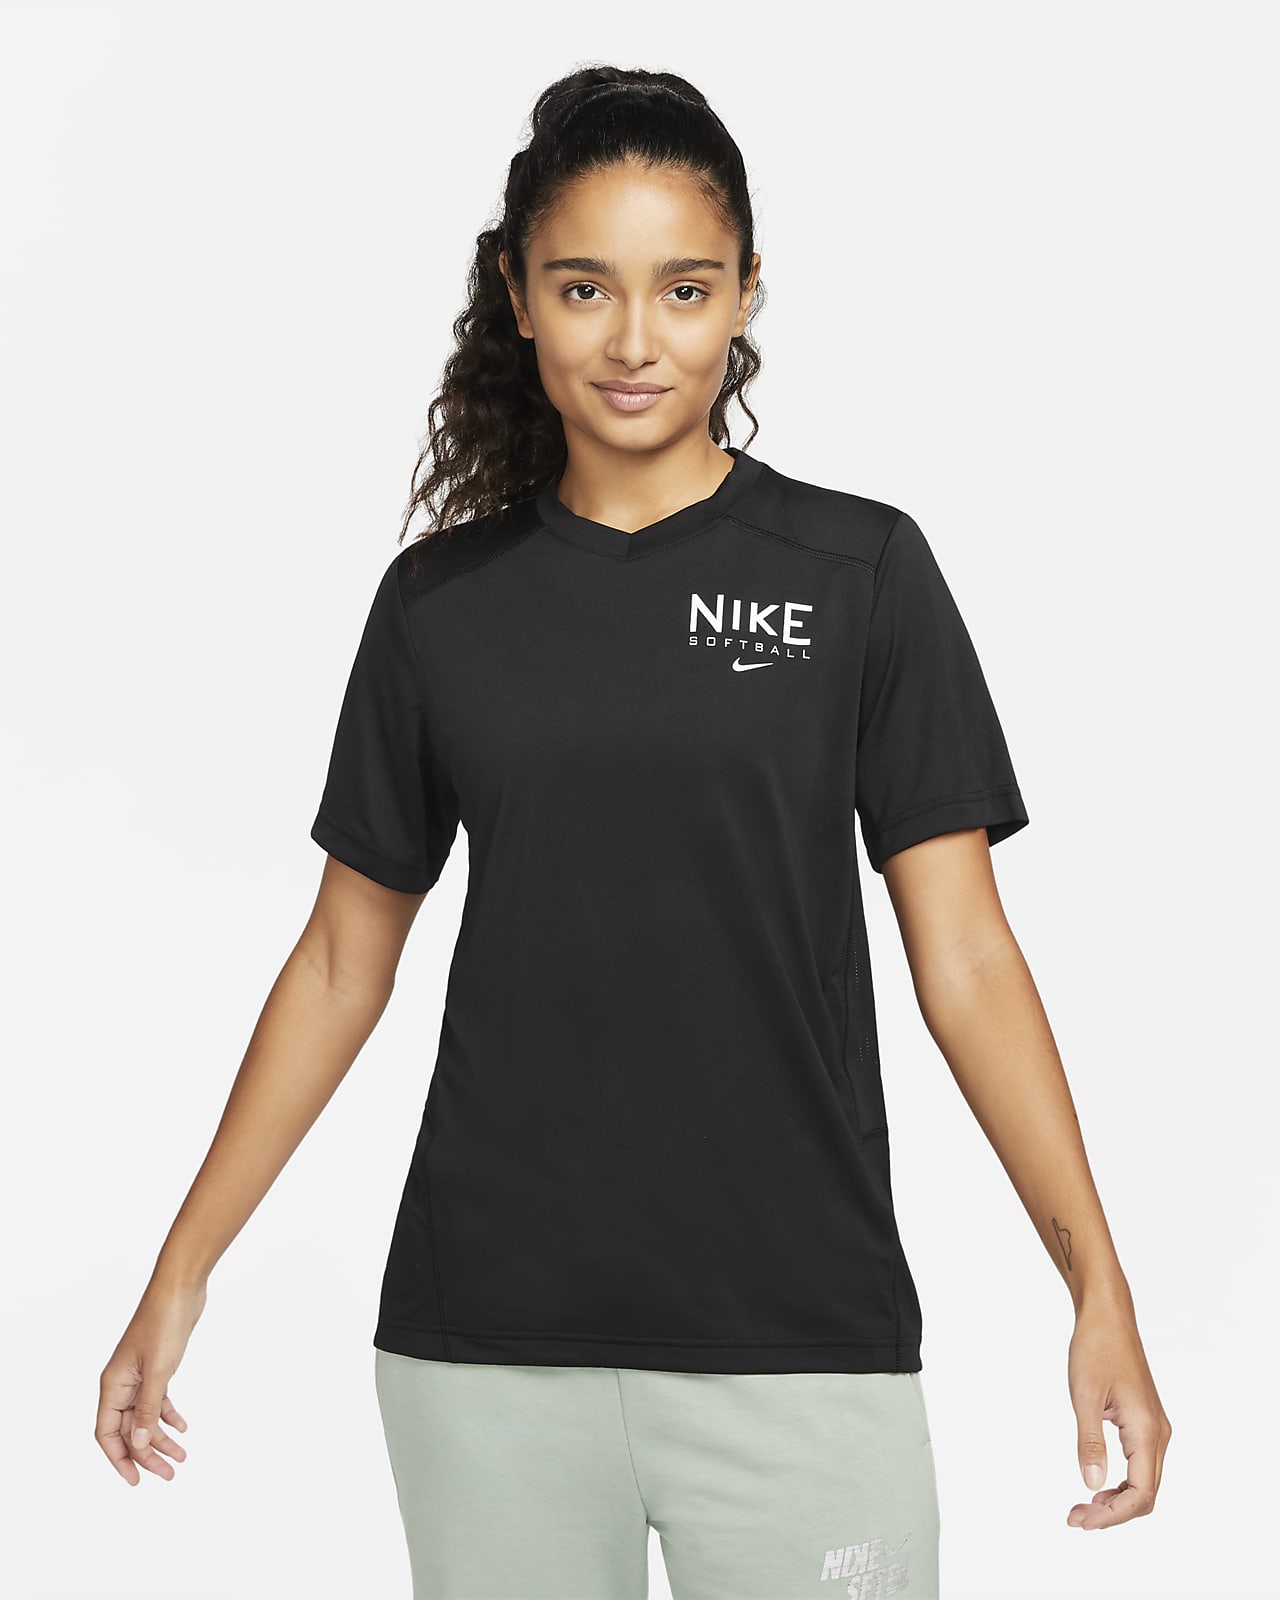 Nike Dri-FIT Practice Women's Short-Sleeve Top